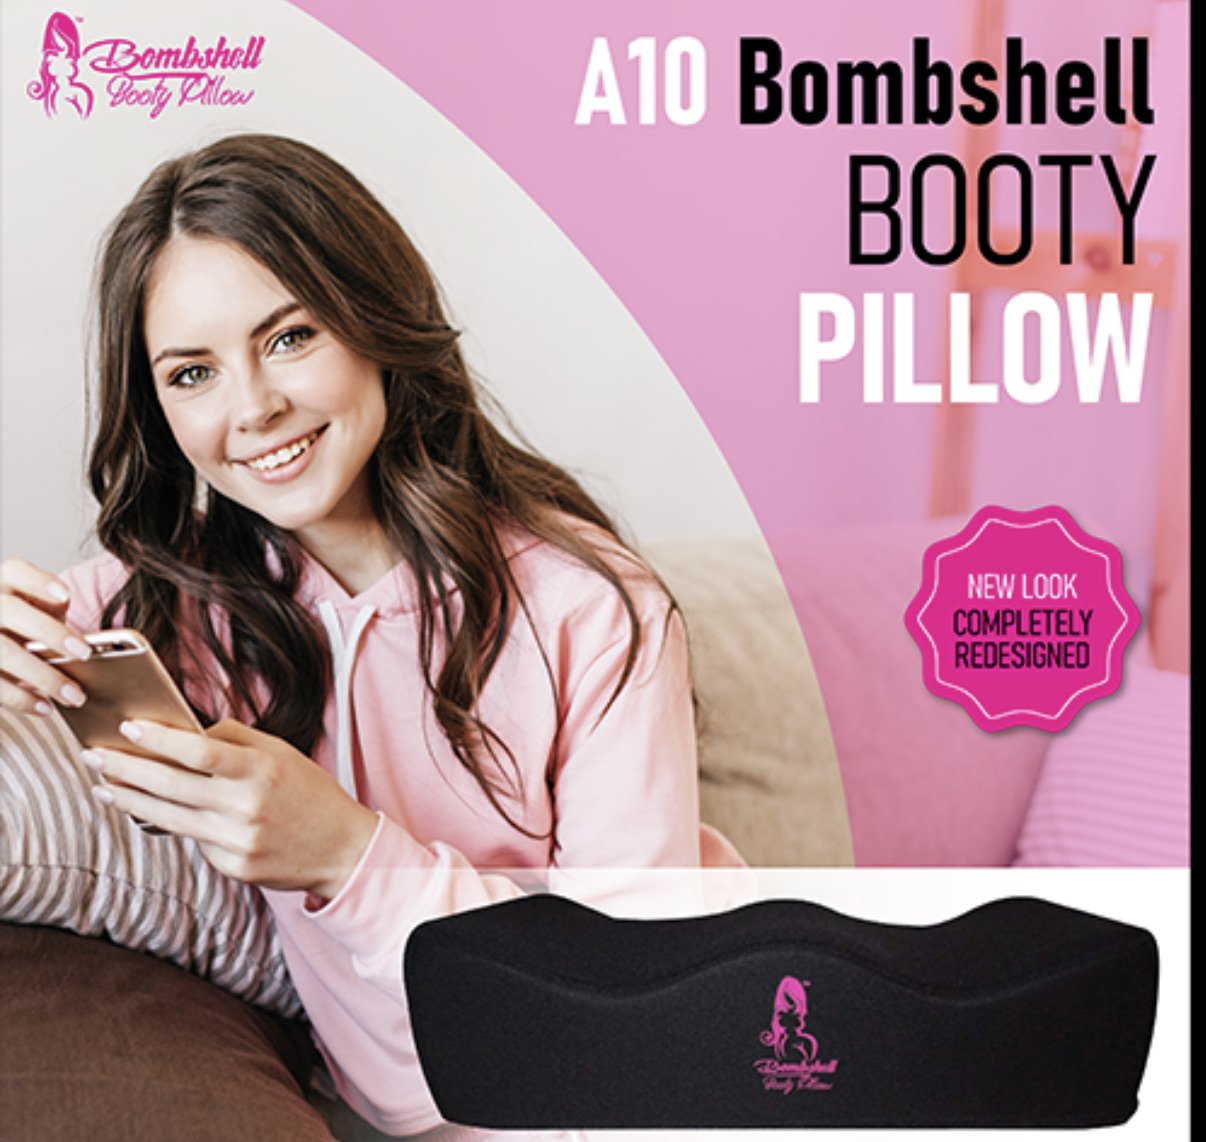 bbl pillow accommodates